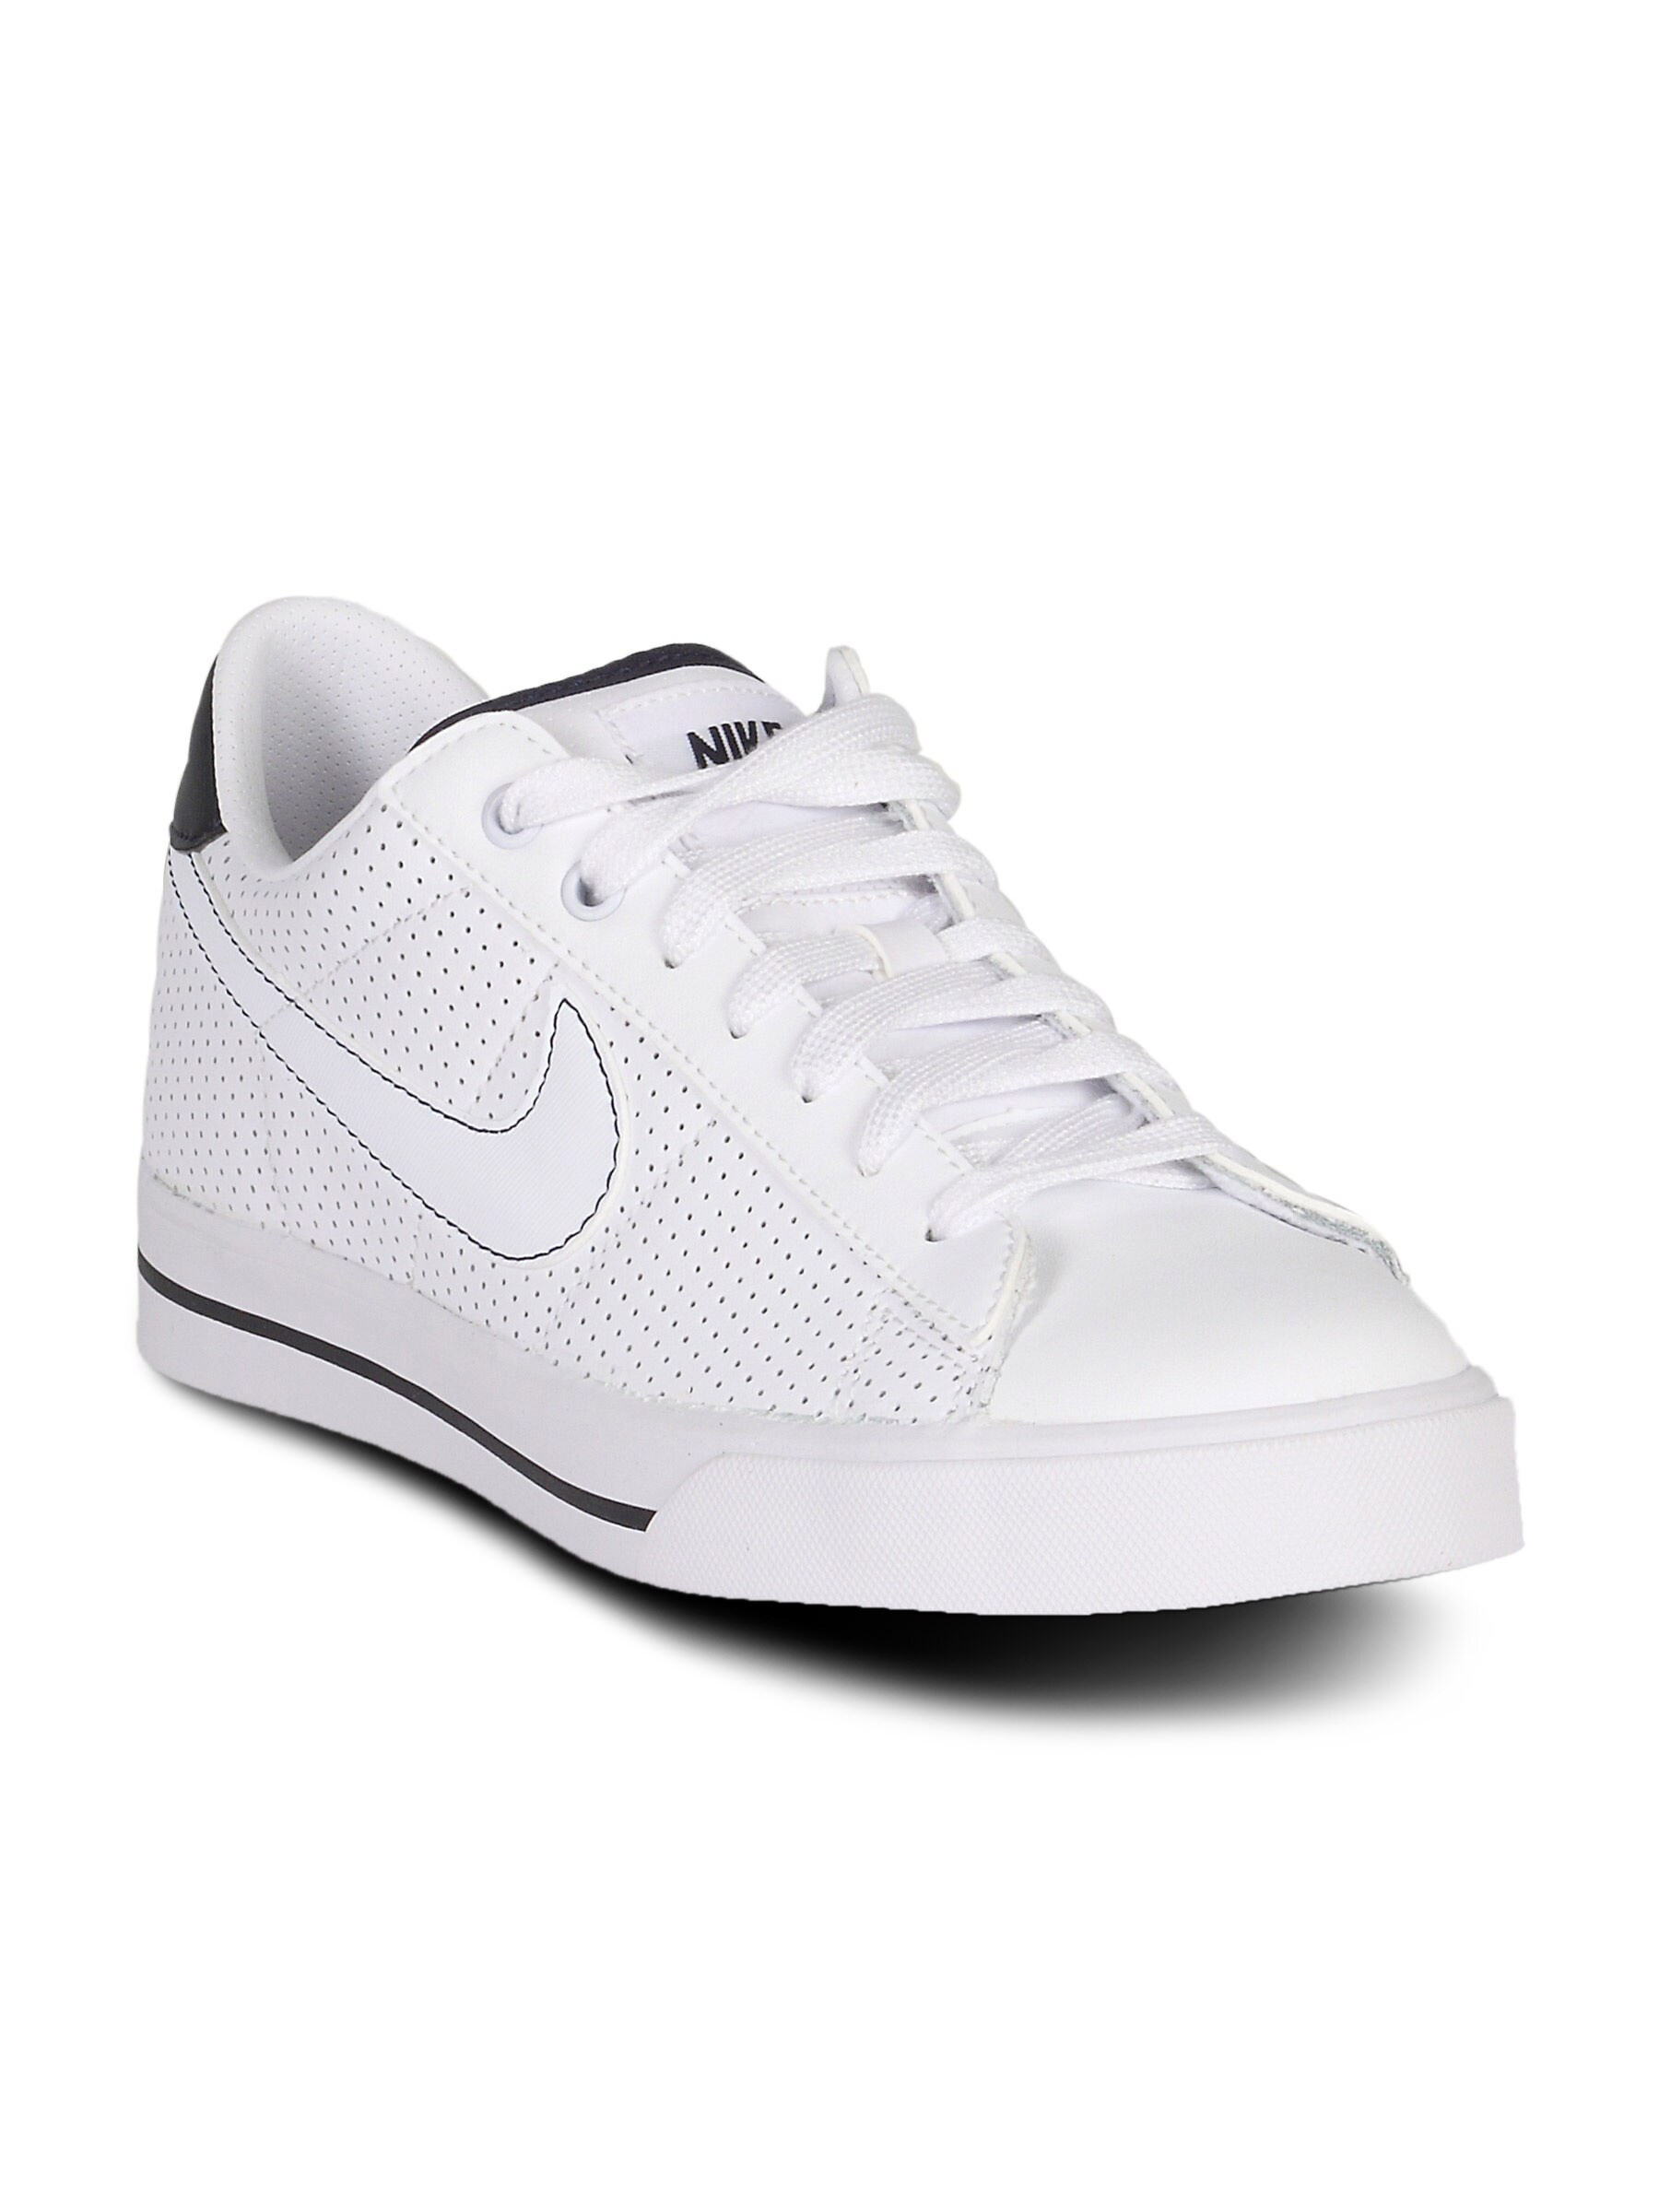 Nike Men's Sweet Classic White Shoe